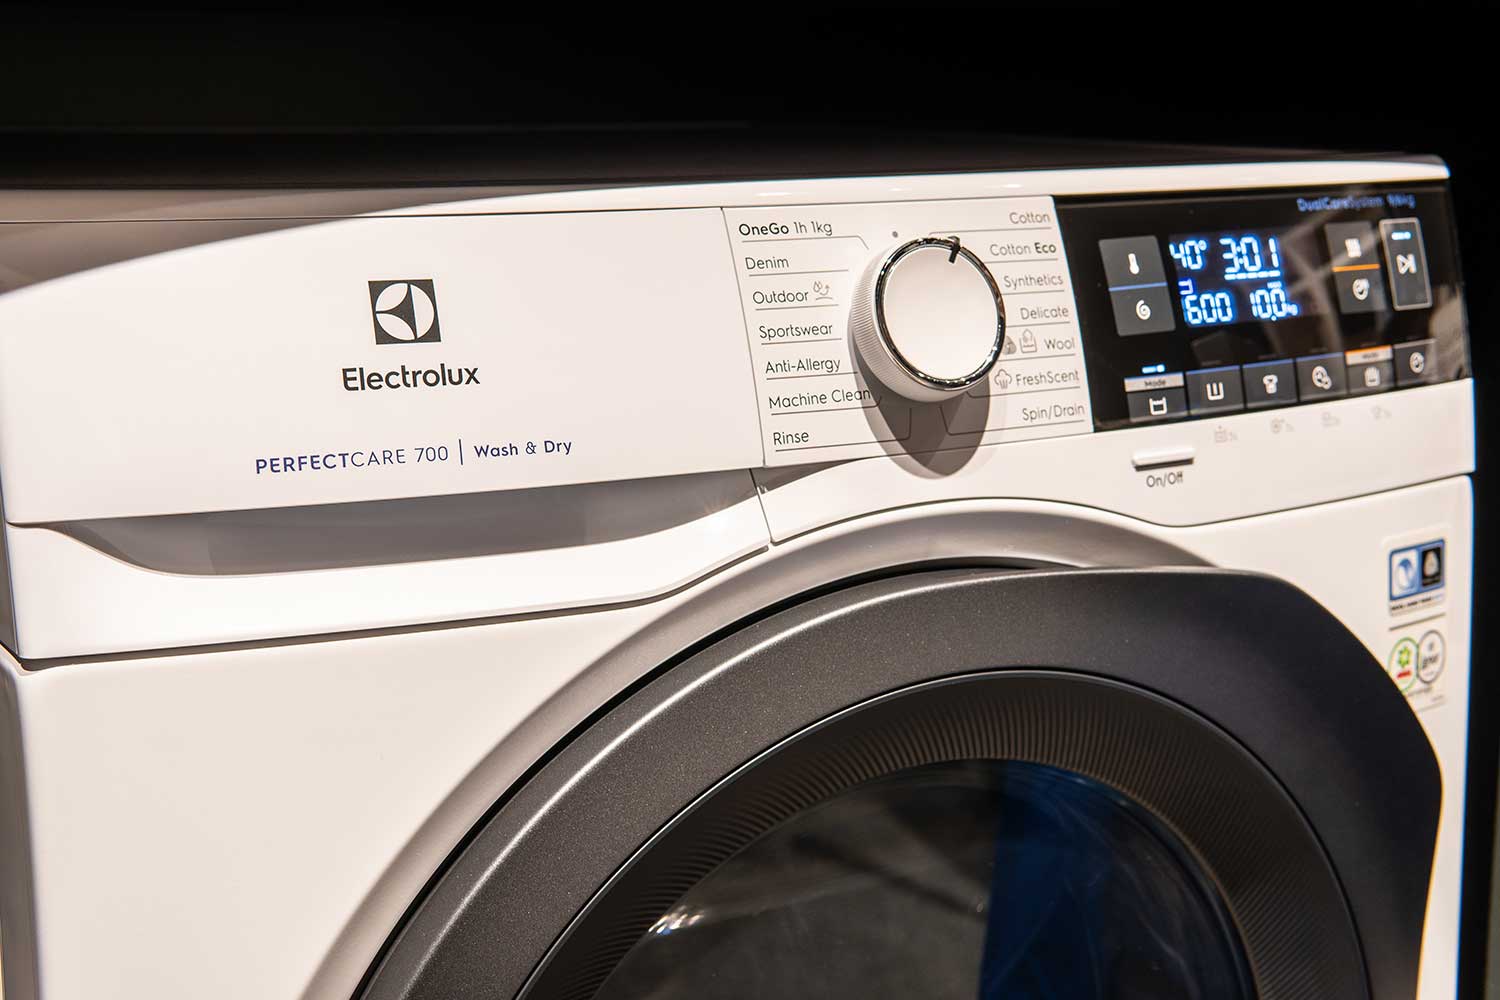 Free-standing Electrolux Washing Machine Tumble Dryer on display